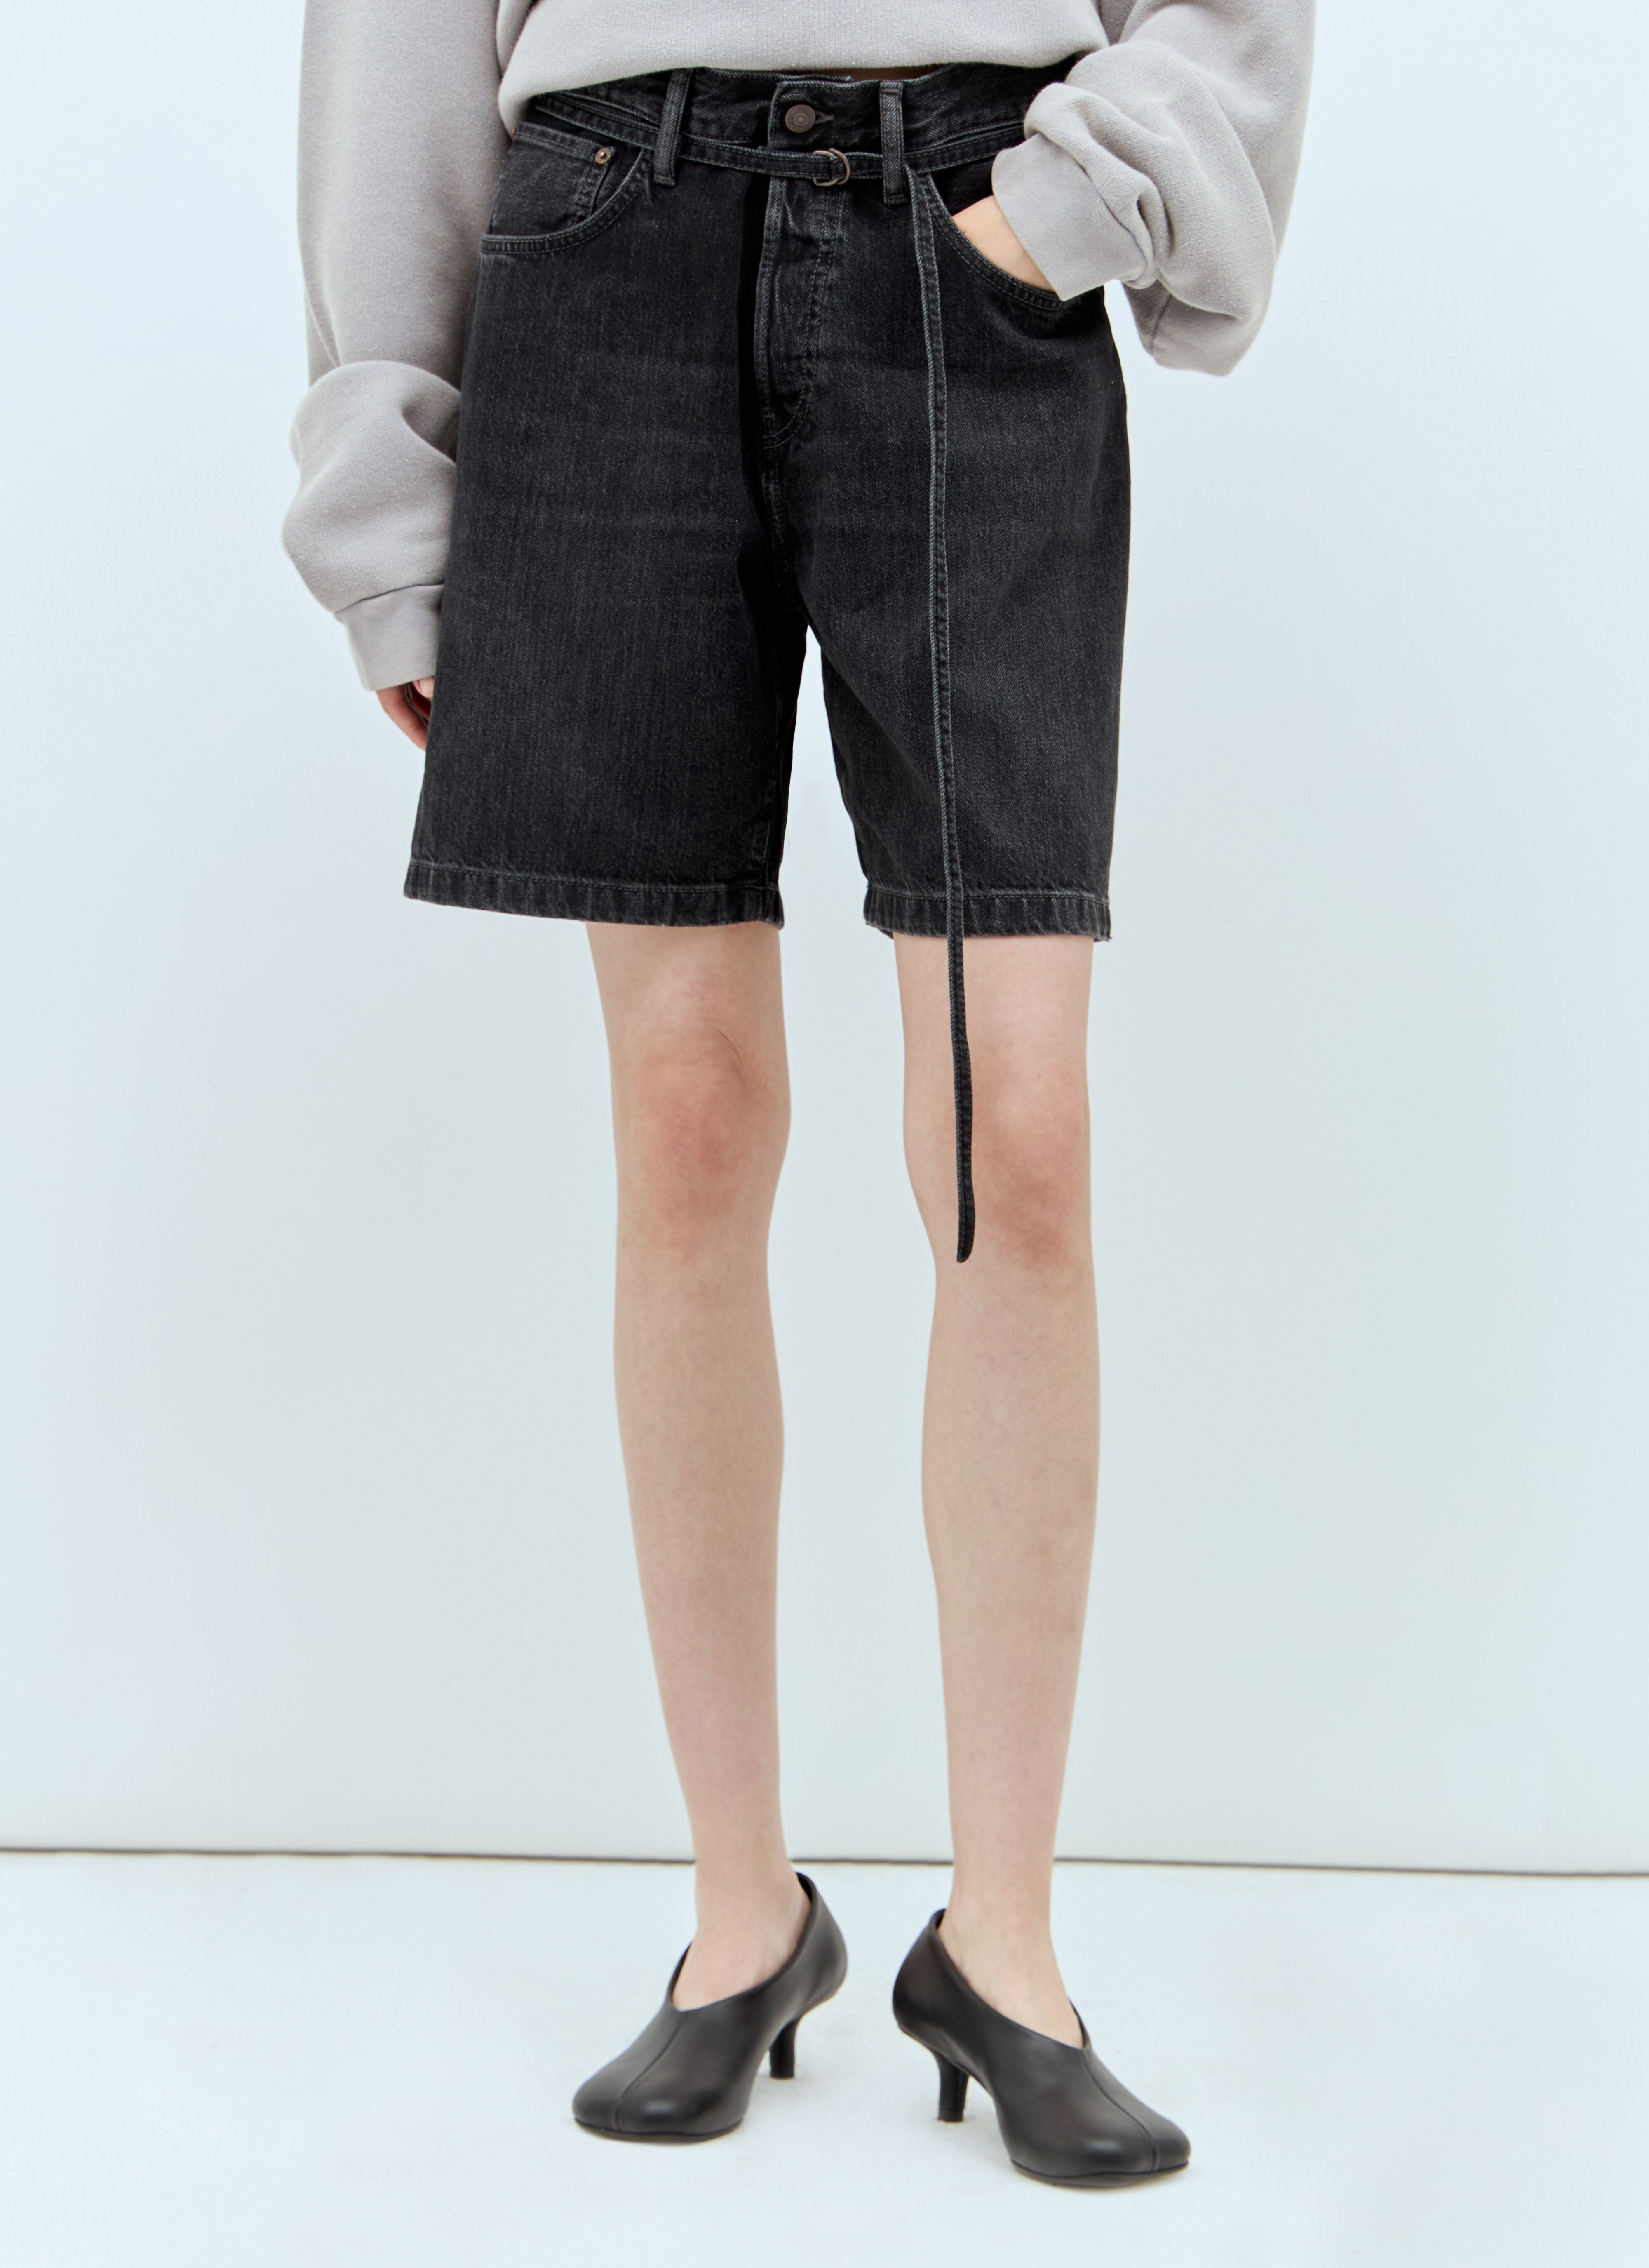 Jean Paul Gaultier Loose-Fit Denim Shorts Black jpg0258007